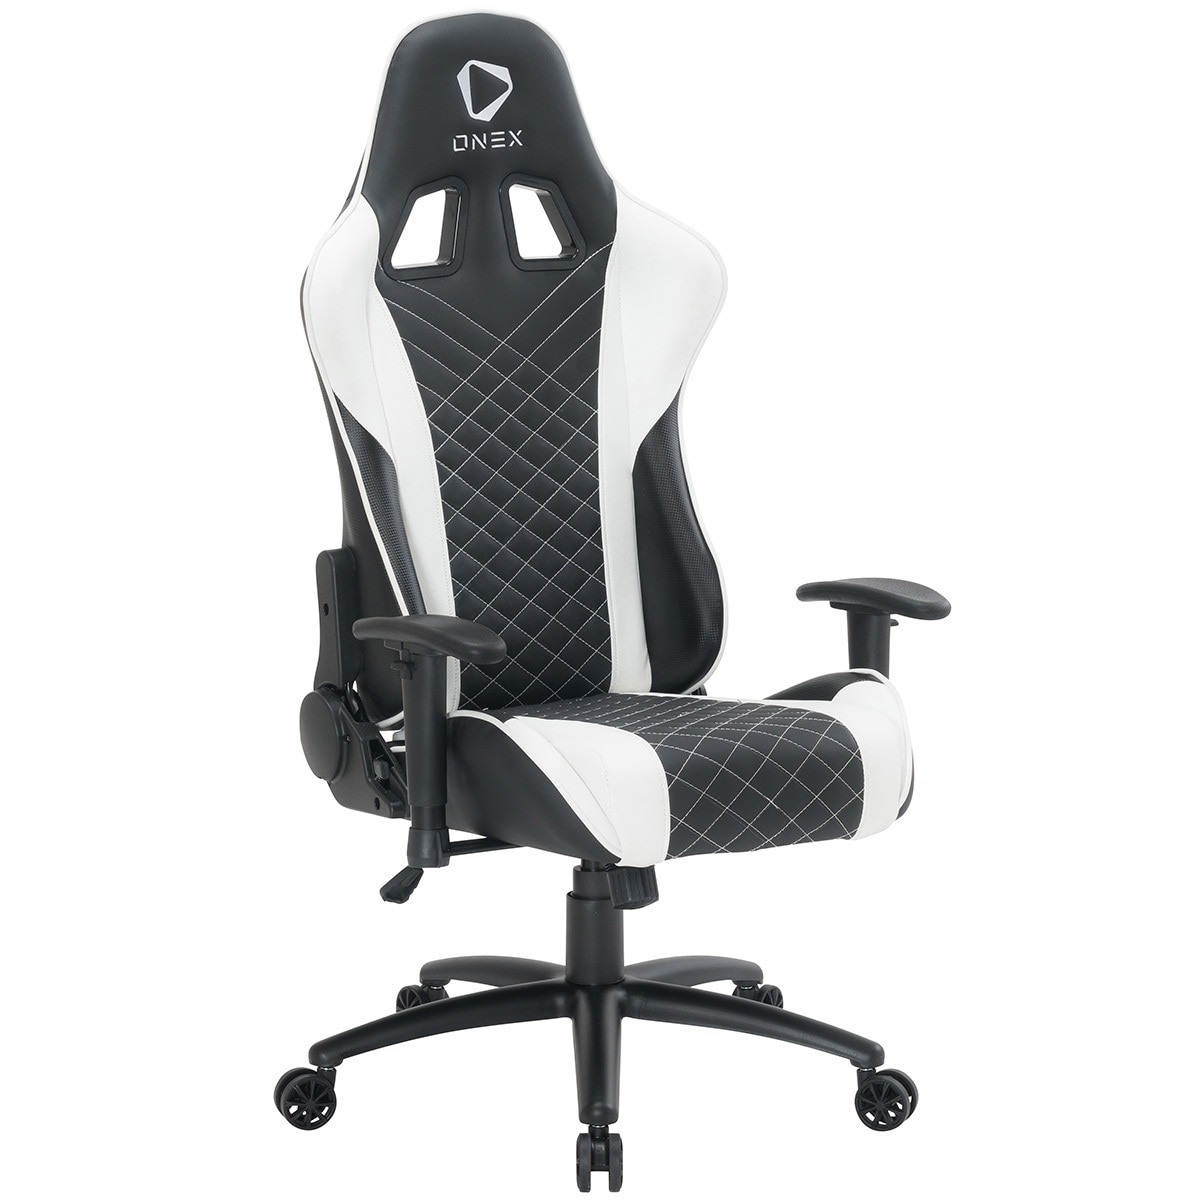 Aerocool Onex GX3 Series Gaming Chair - Black/White